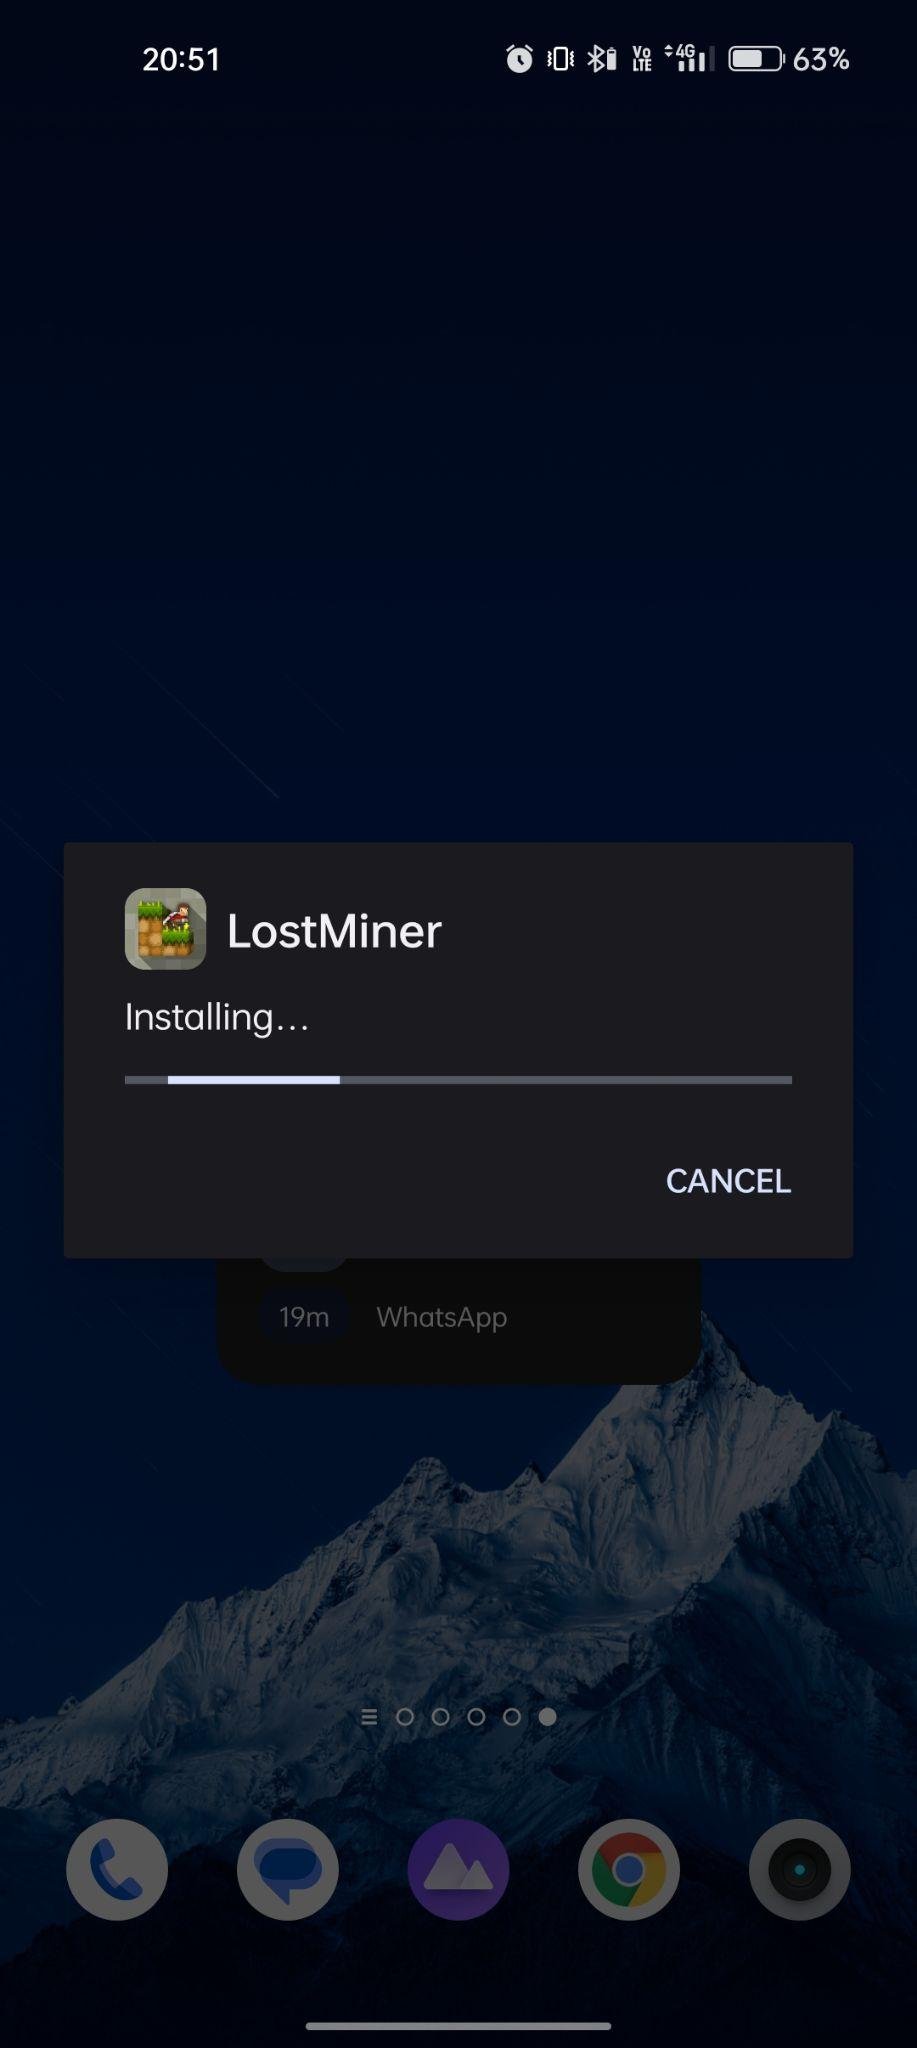 lostminer apk installing